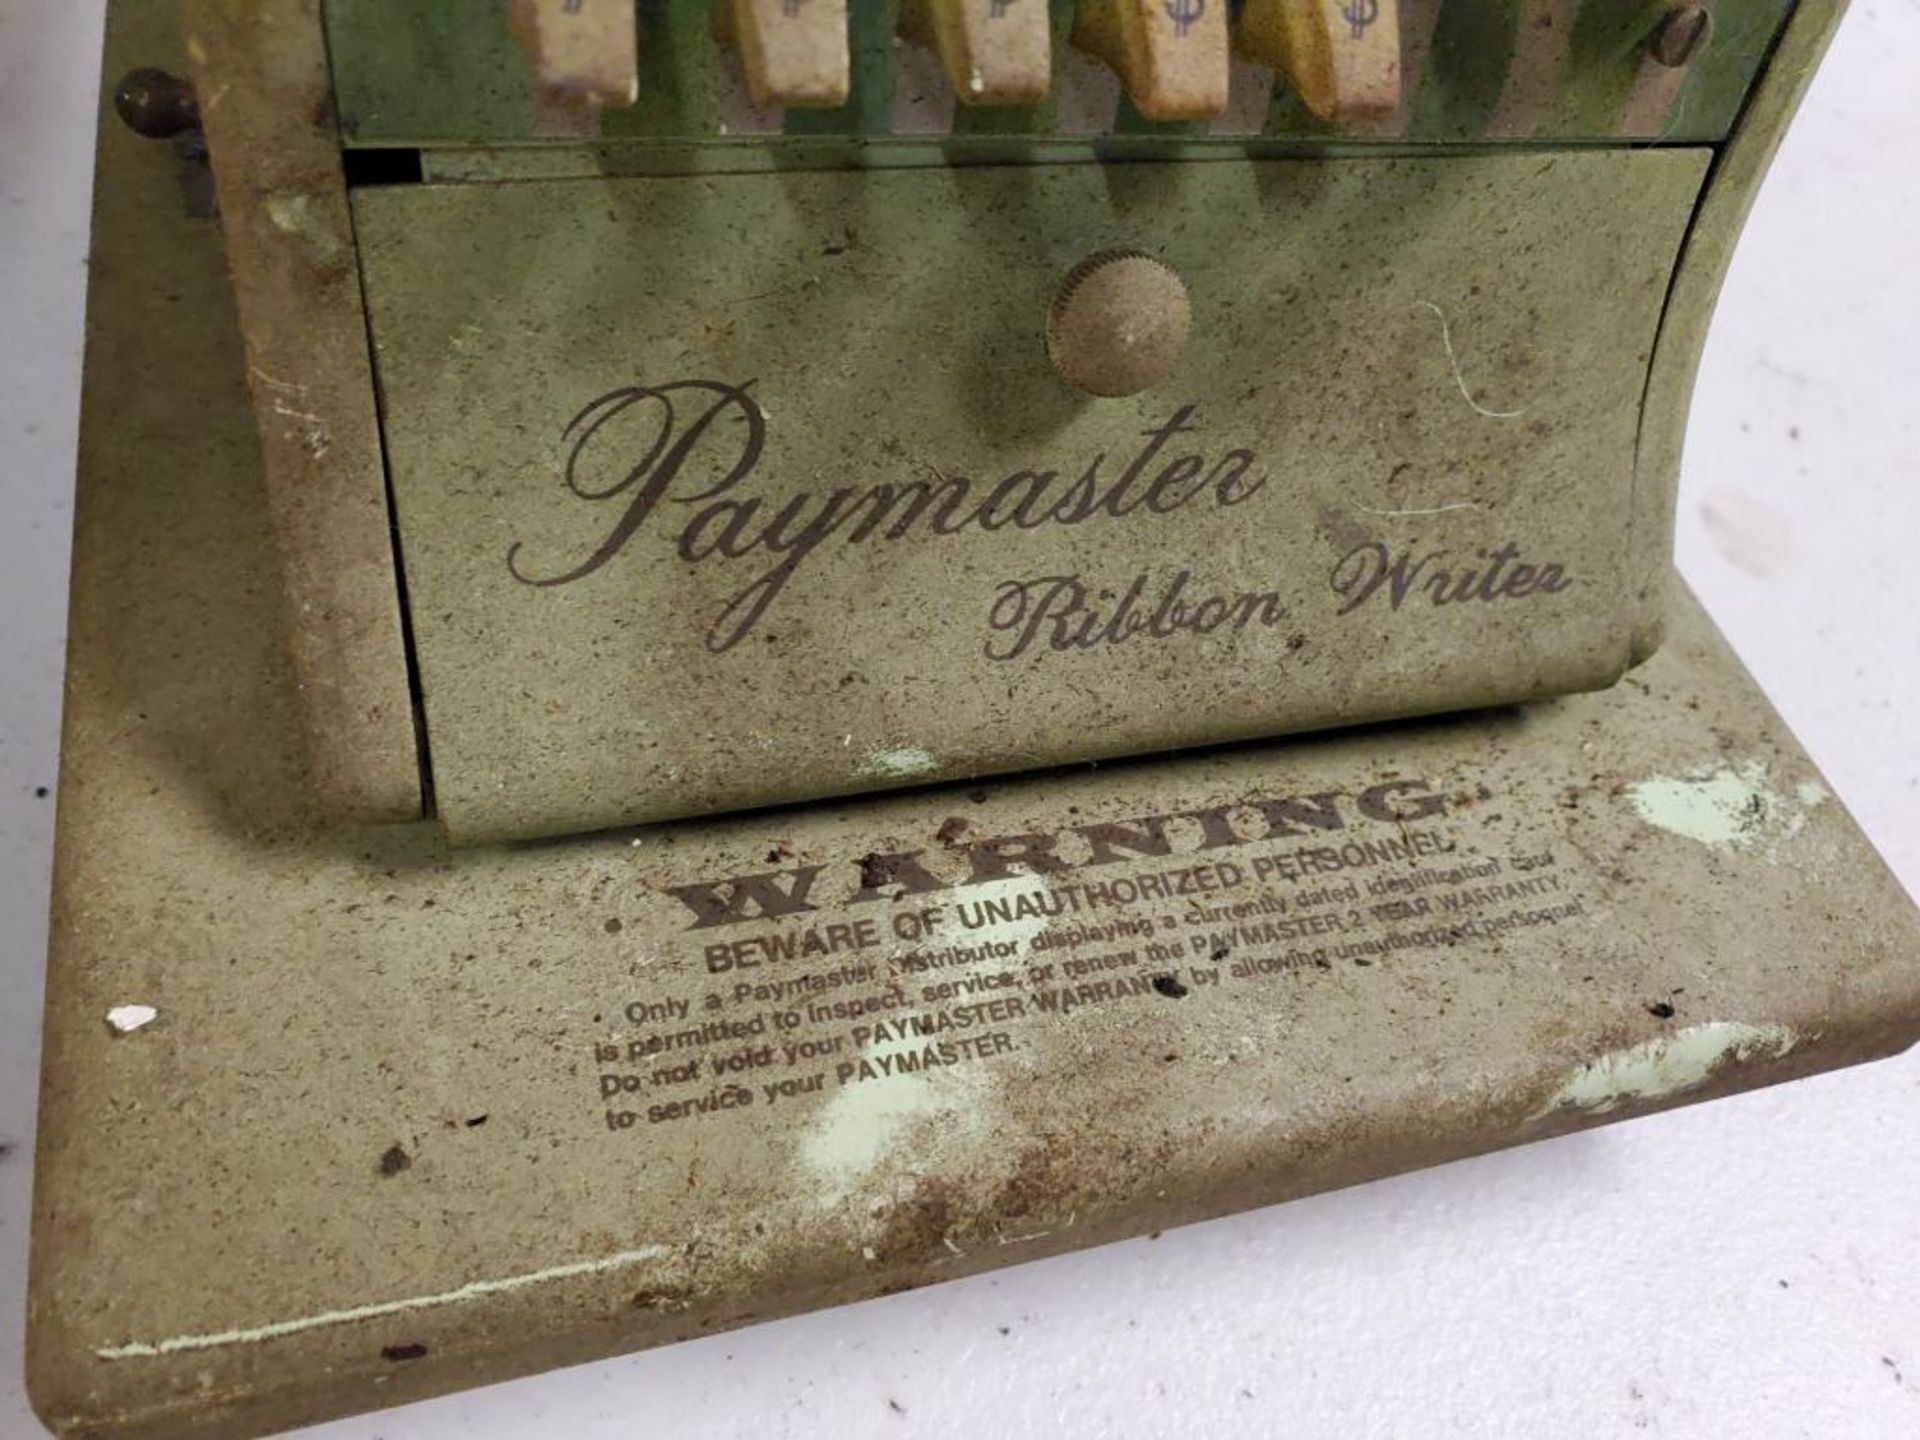 Qty 2 - Paymaster ribbon writer machine. - Image 3 of 5